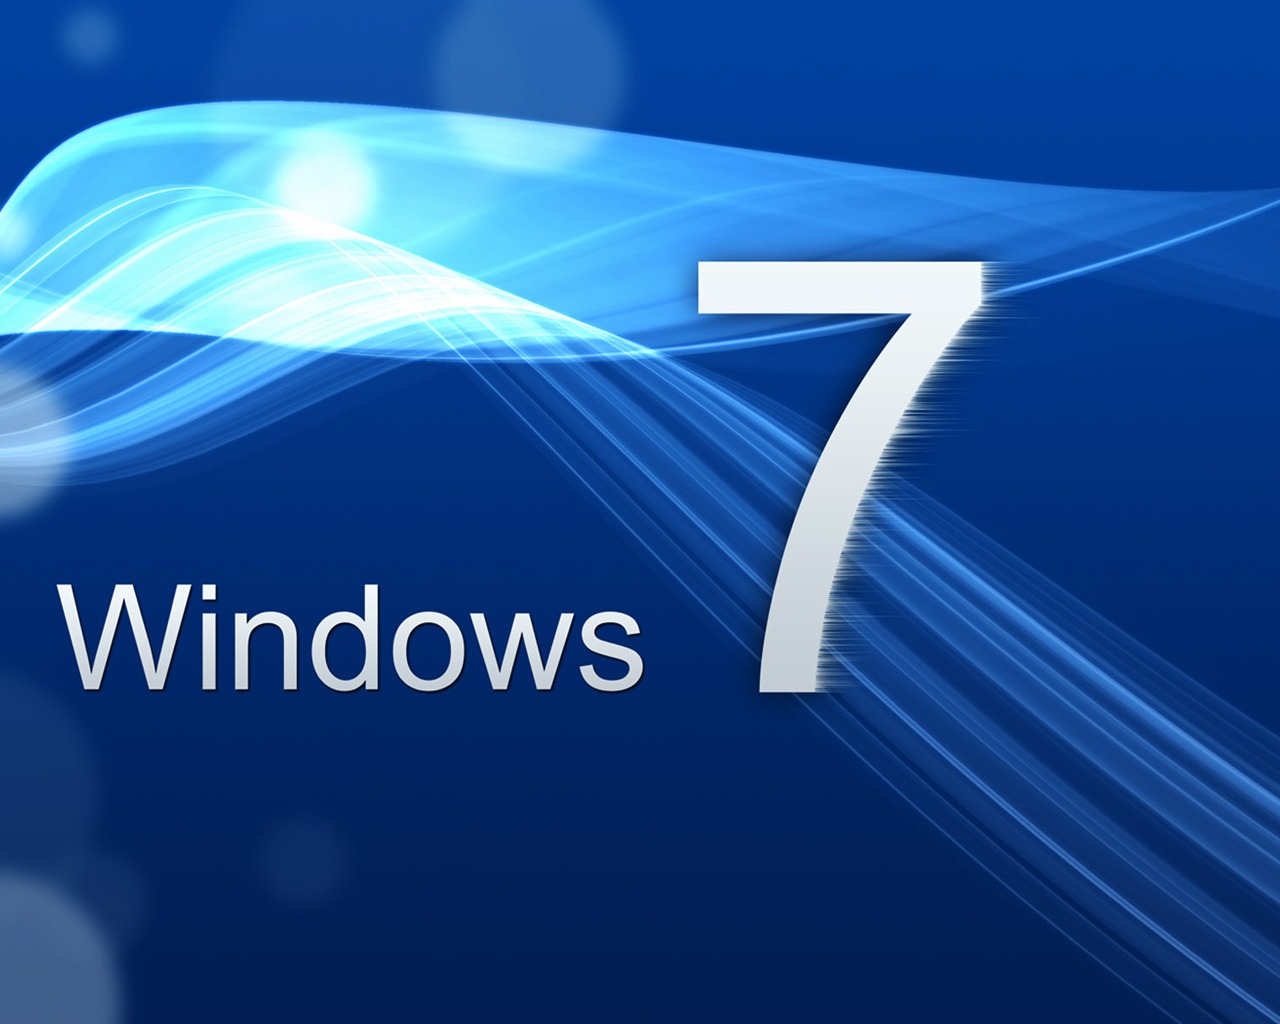 Windows 7 wallpaper themes download 1280x1024 - HD Widescreen